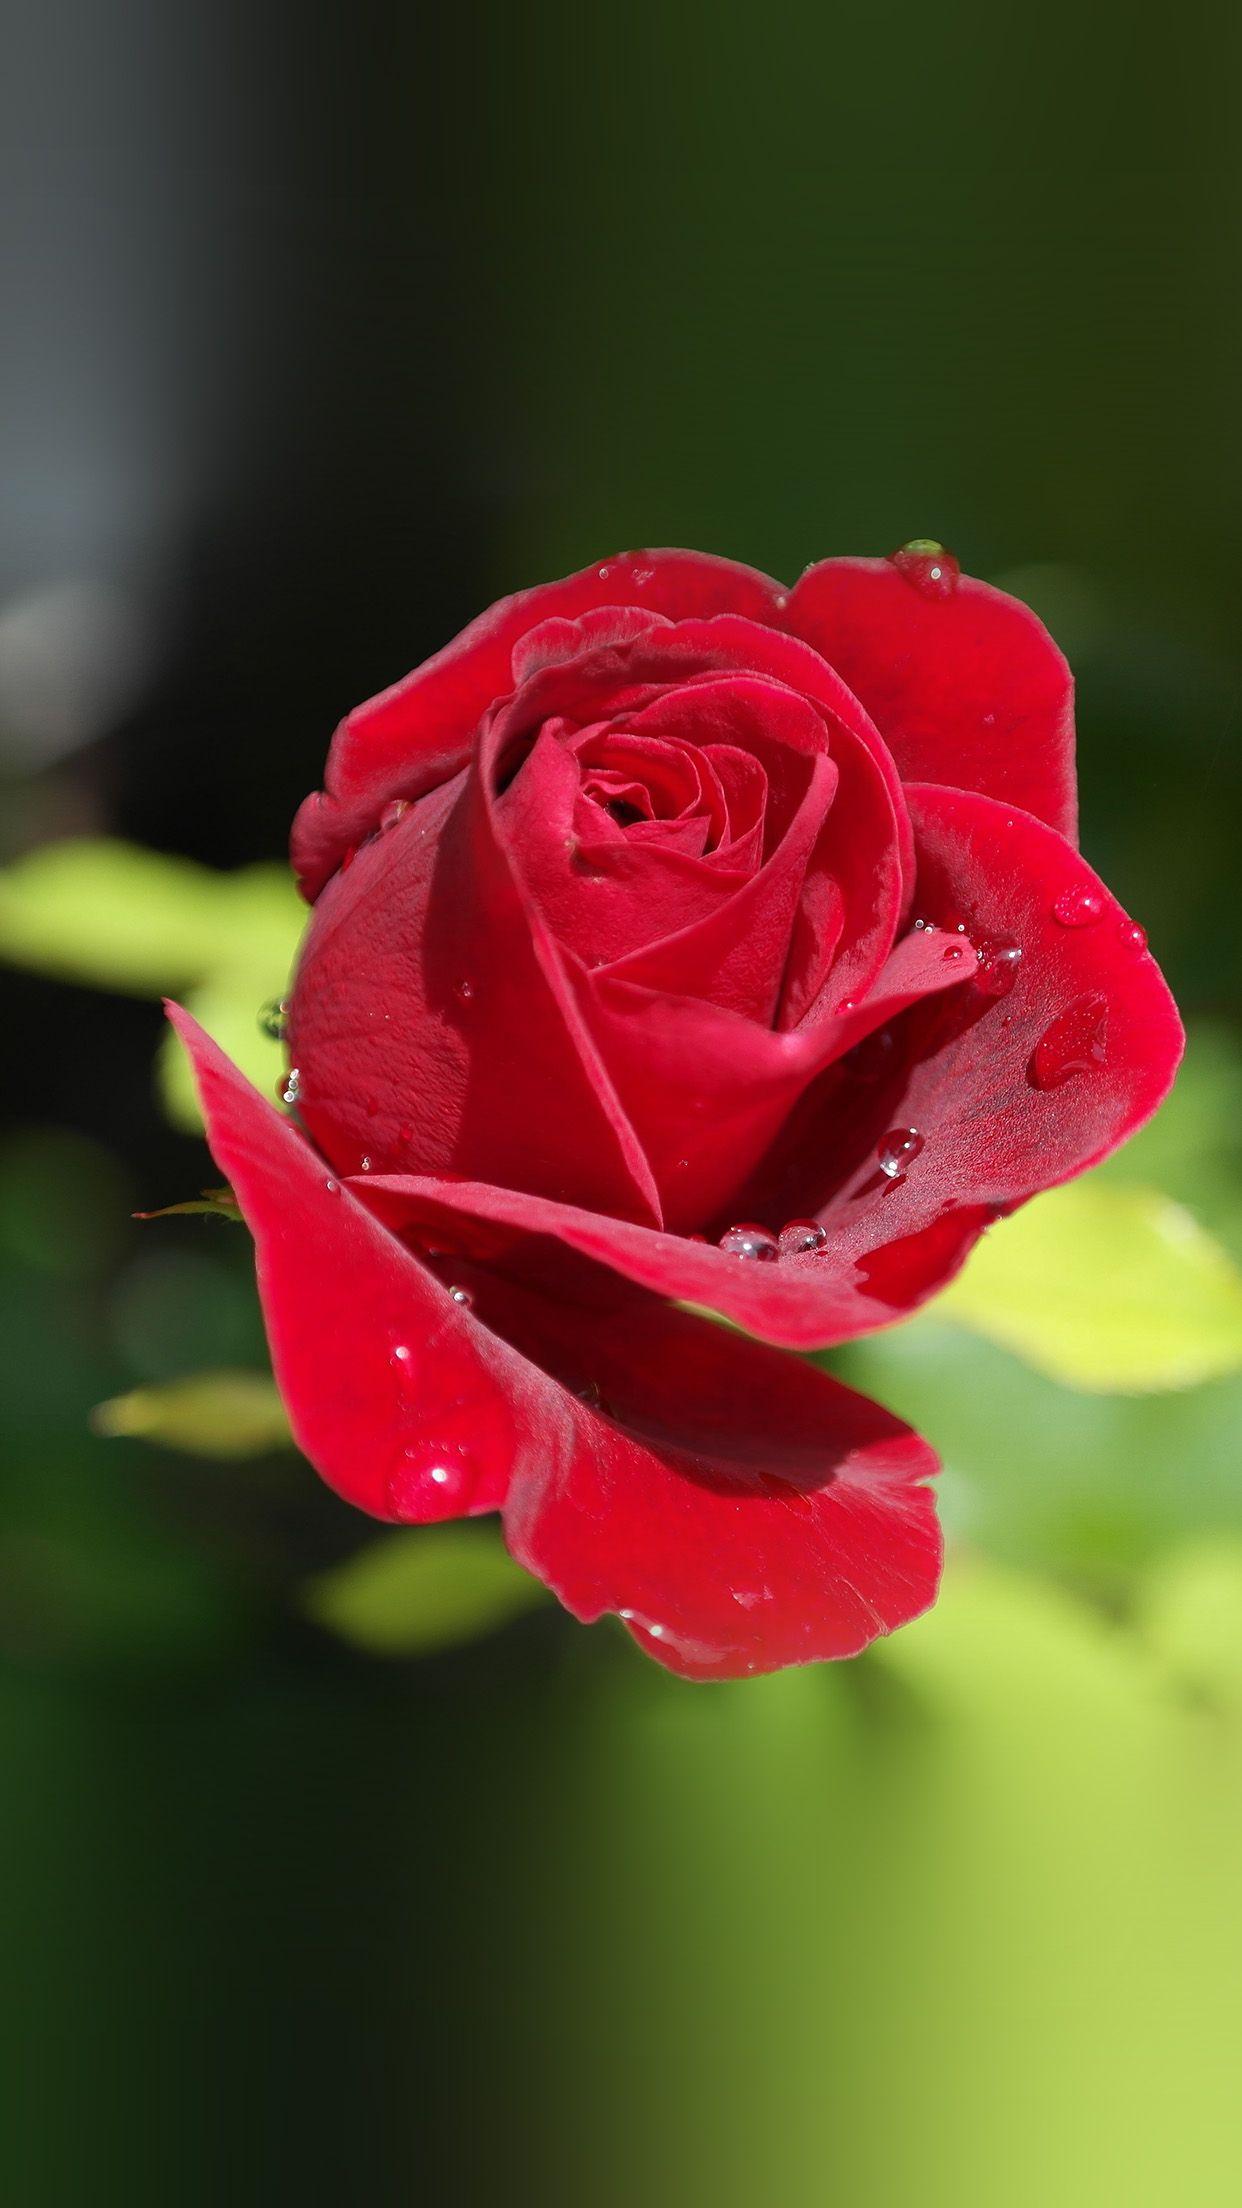 I Love Papers. rose red nature flower bokeh rain